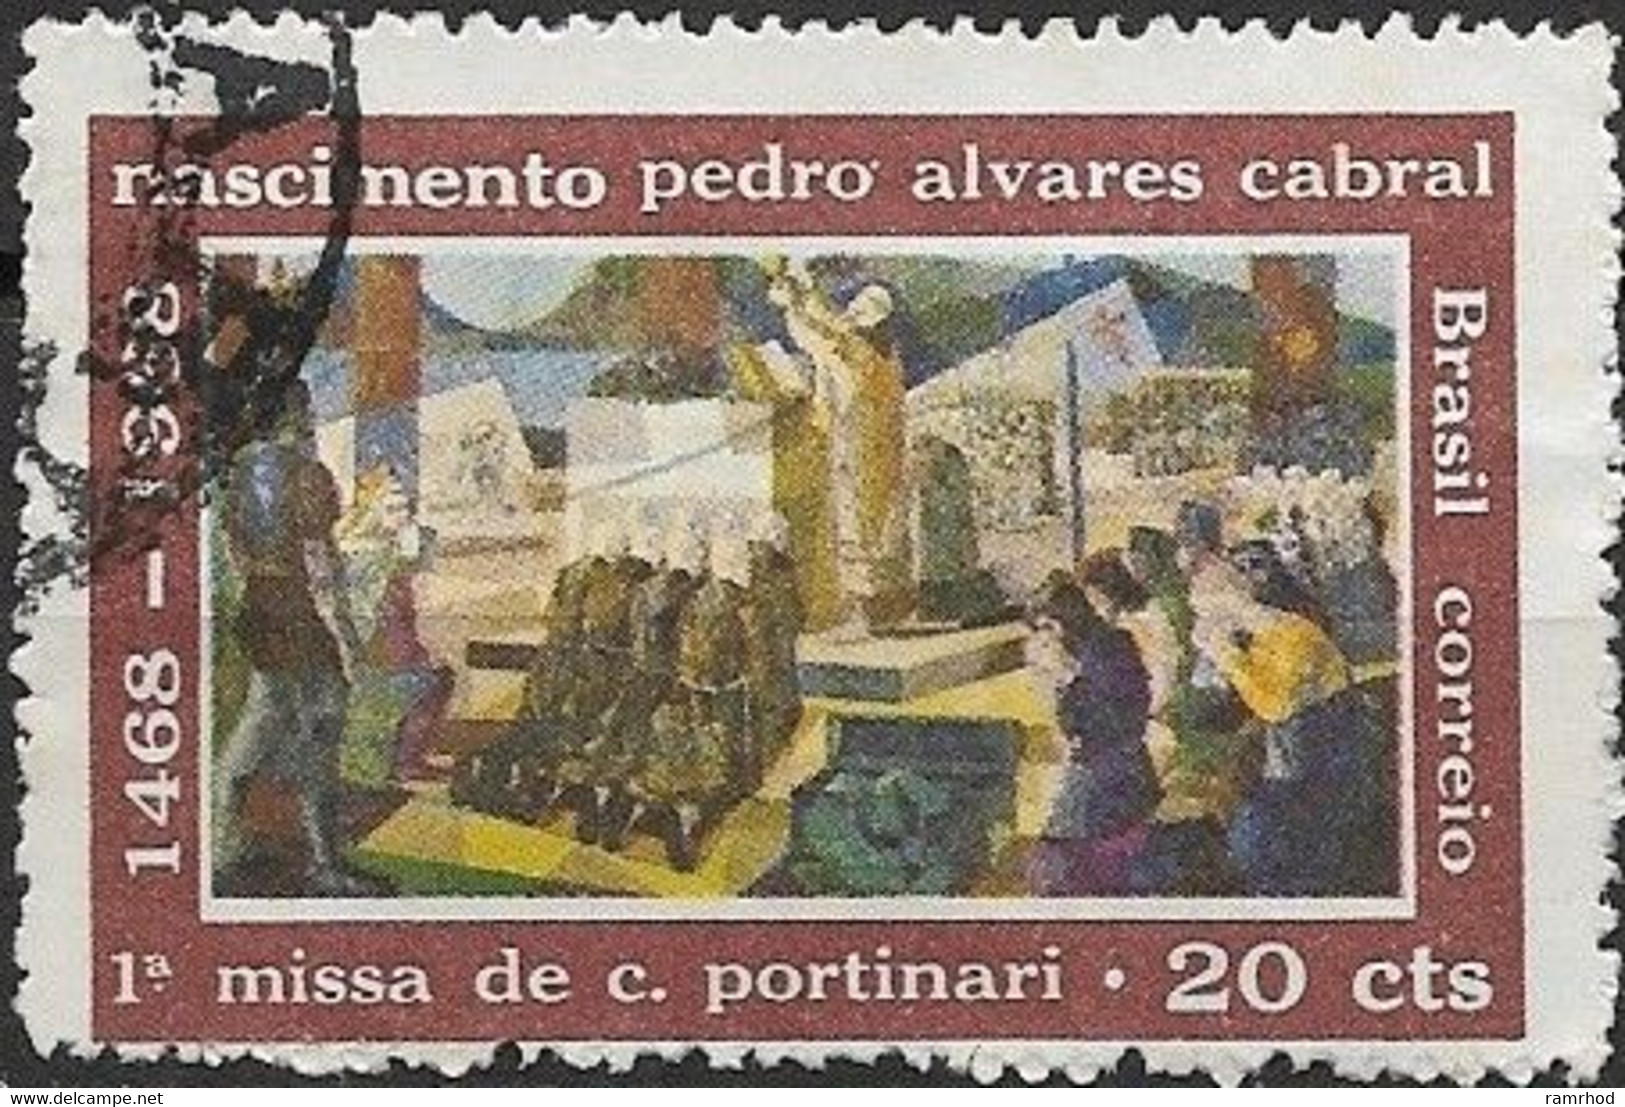 BRAZIL 1968 500th Birth Anniv Of Pedro Cabral (discoverer Of Brazil). - 20c. The First Mass (C. Portinari) FU - Oblitérés